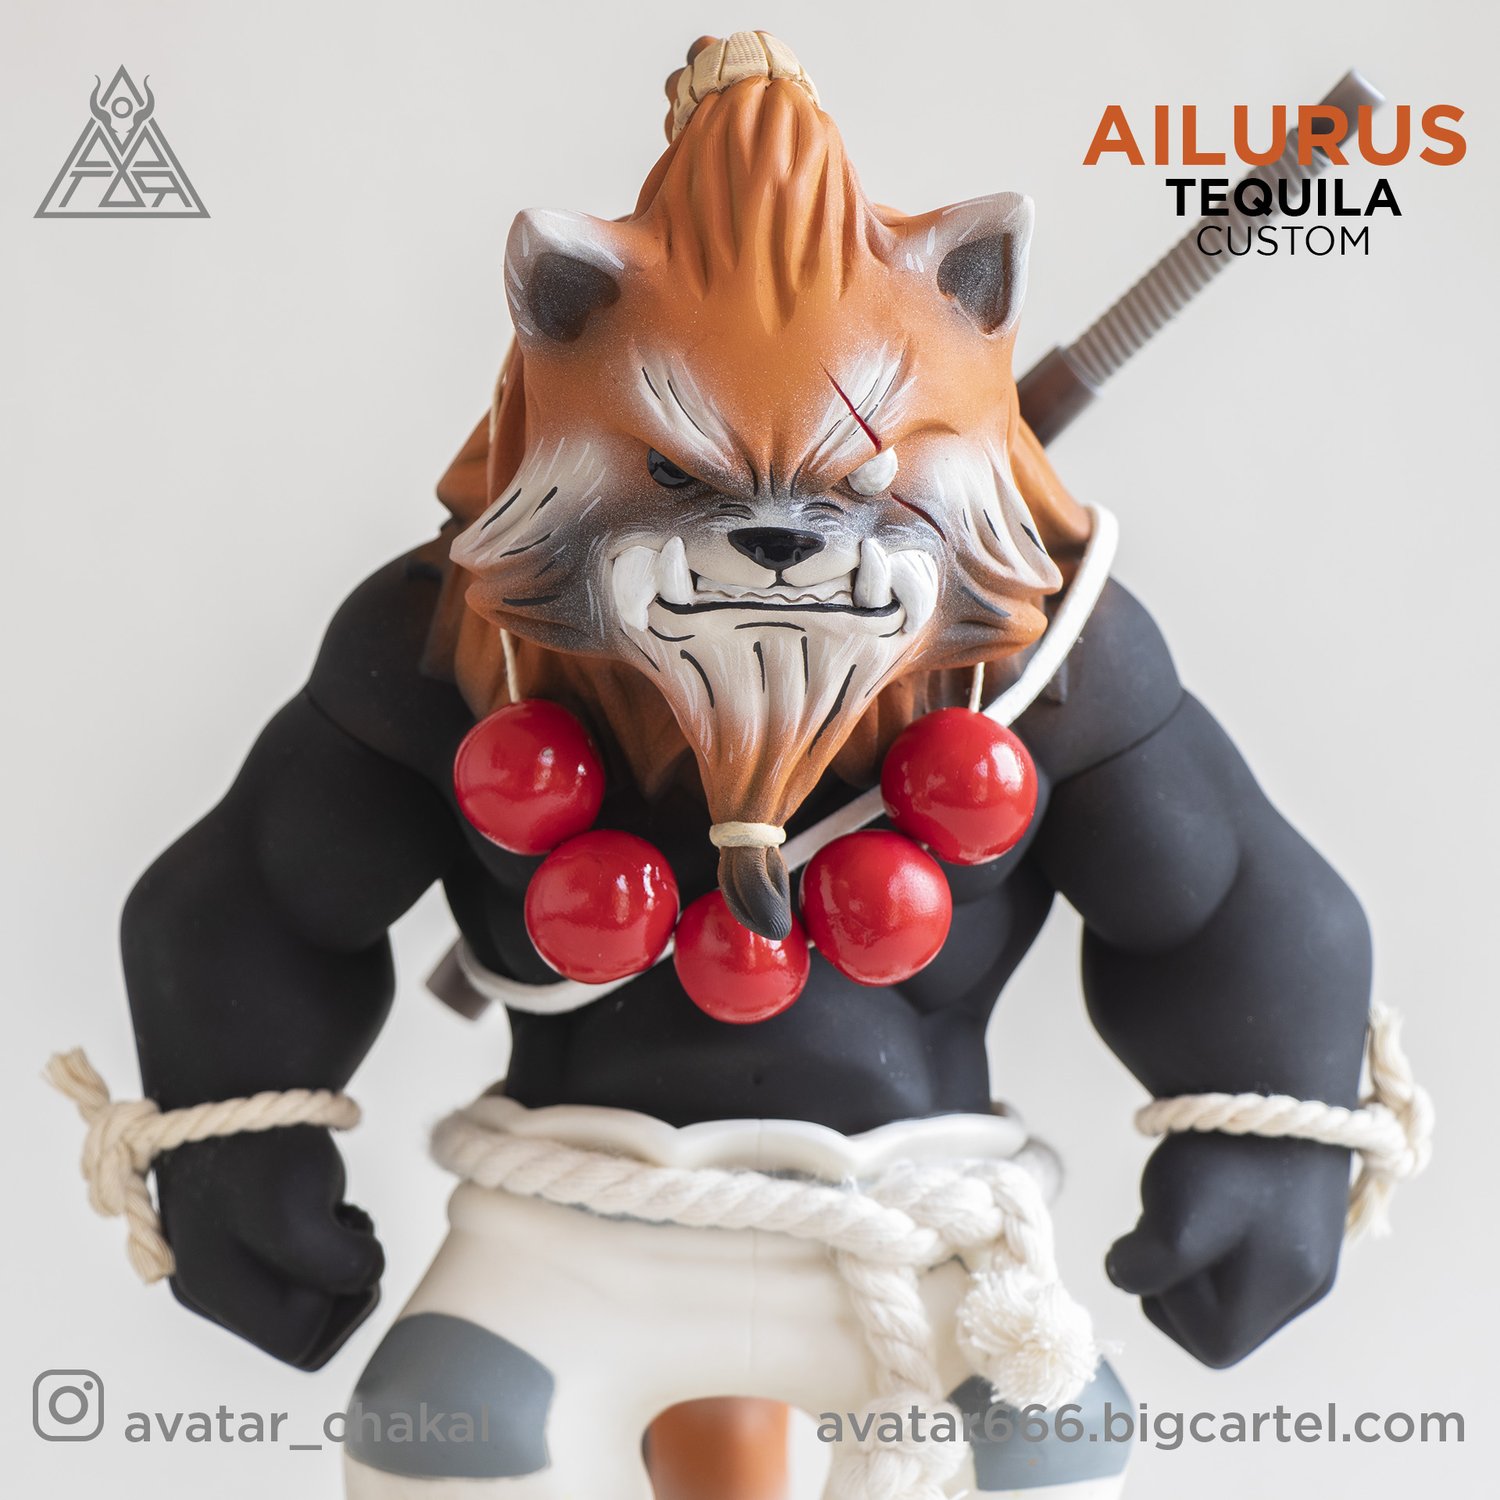 Image of Ailurus